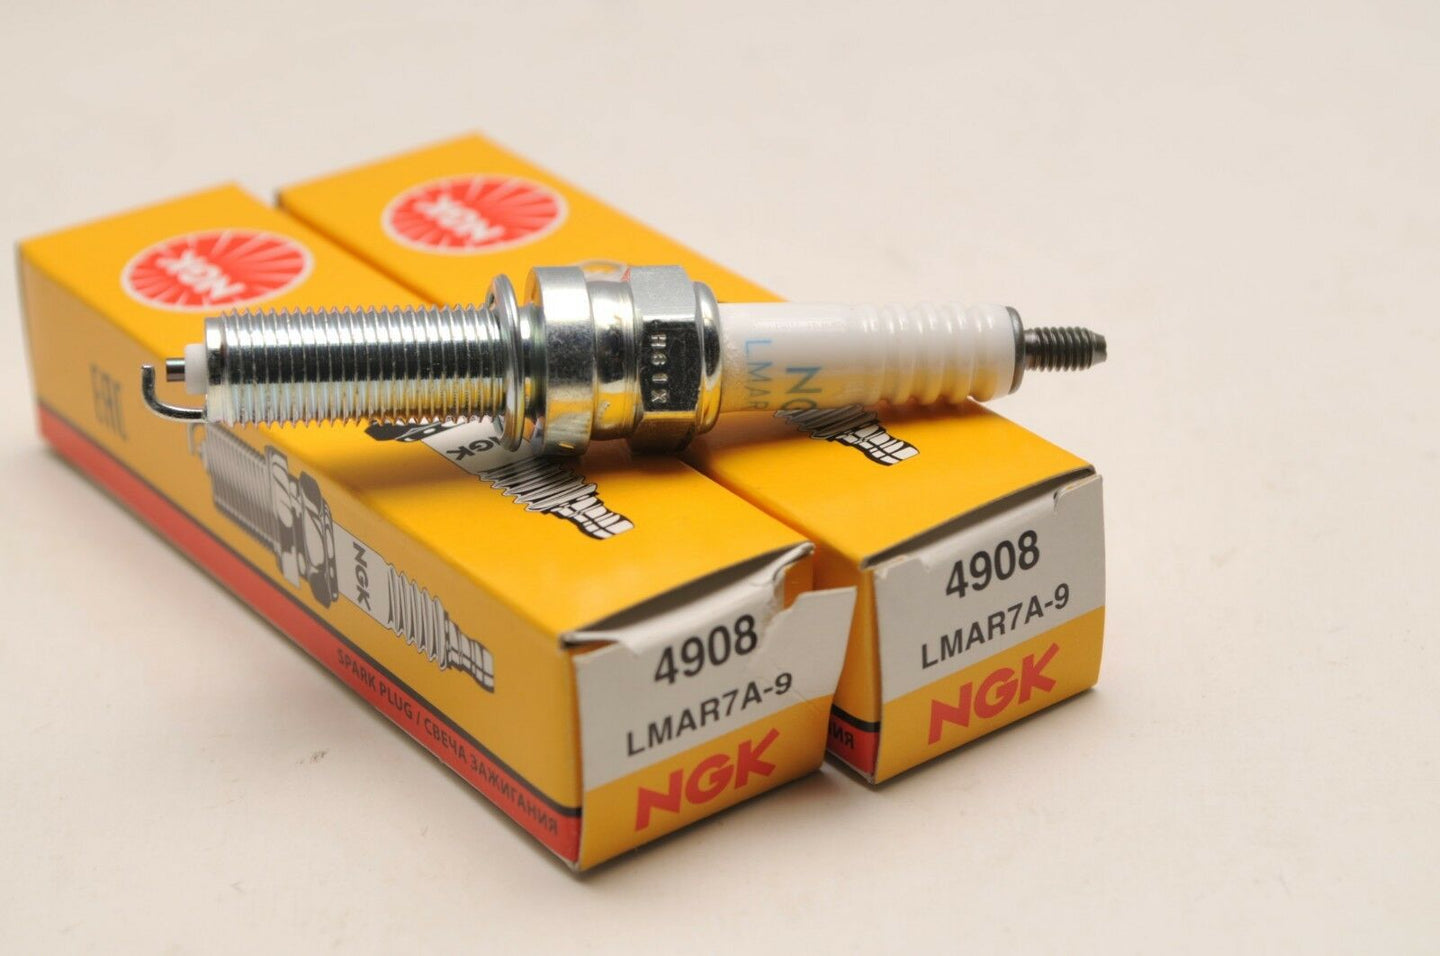 (2) NGK LMAR7A-9 Spark Plug Plugs Bougies-Lot of Two / Lot de Deux 4908 KTM Husq